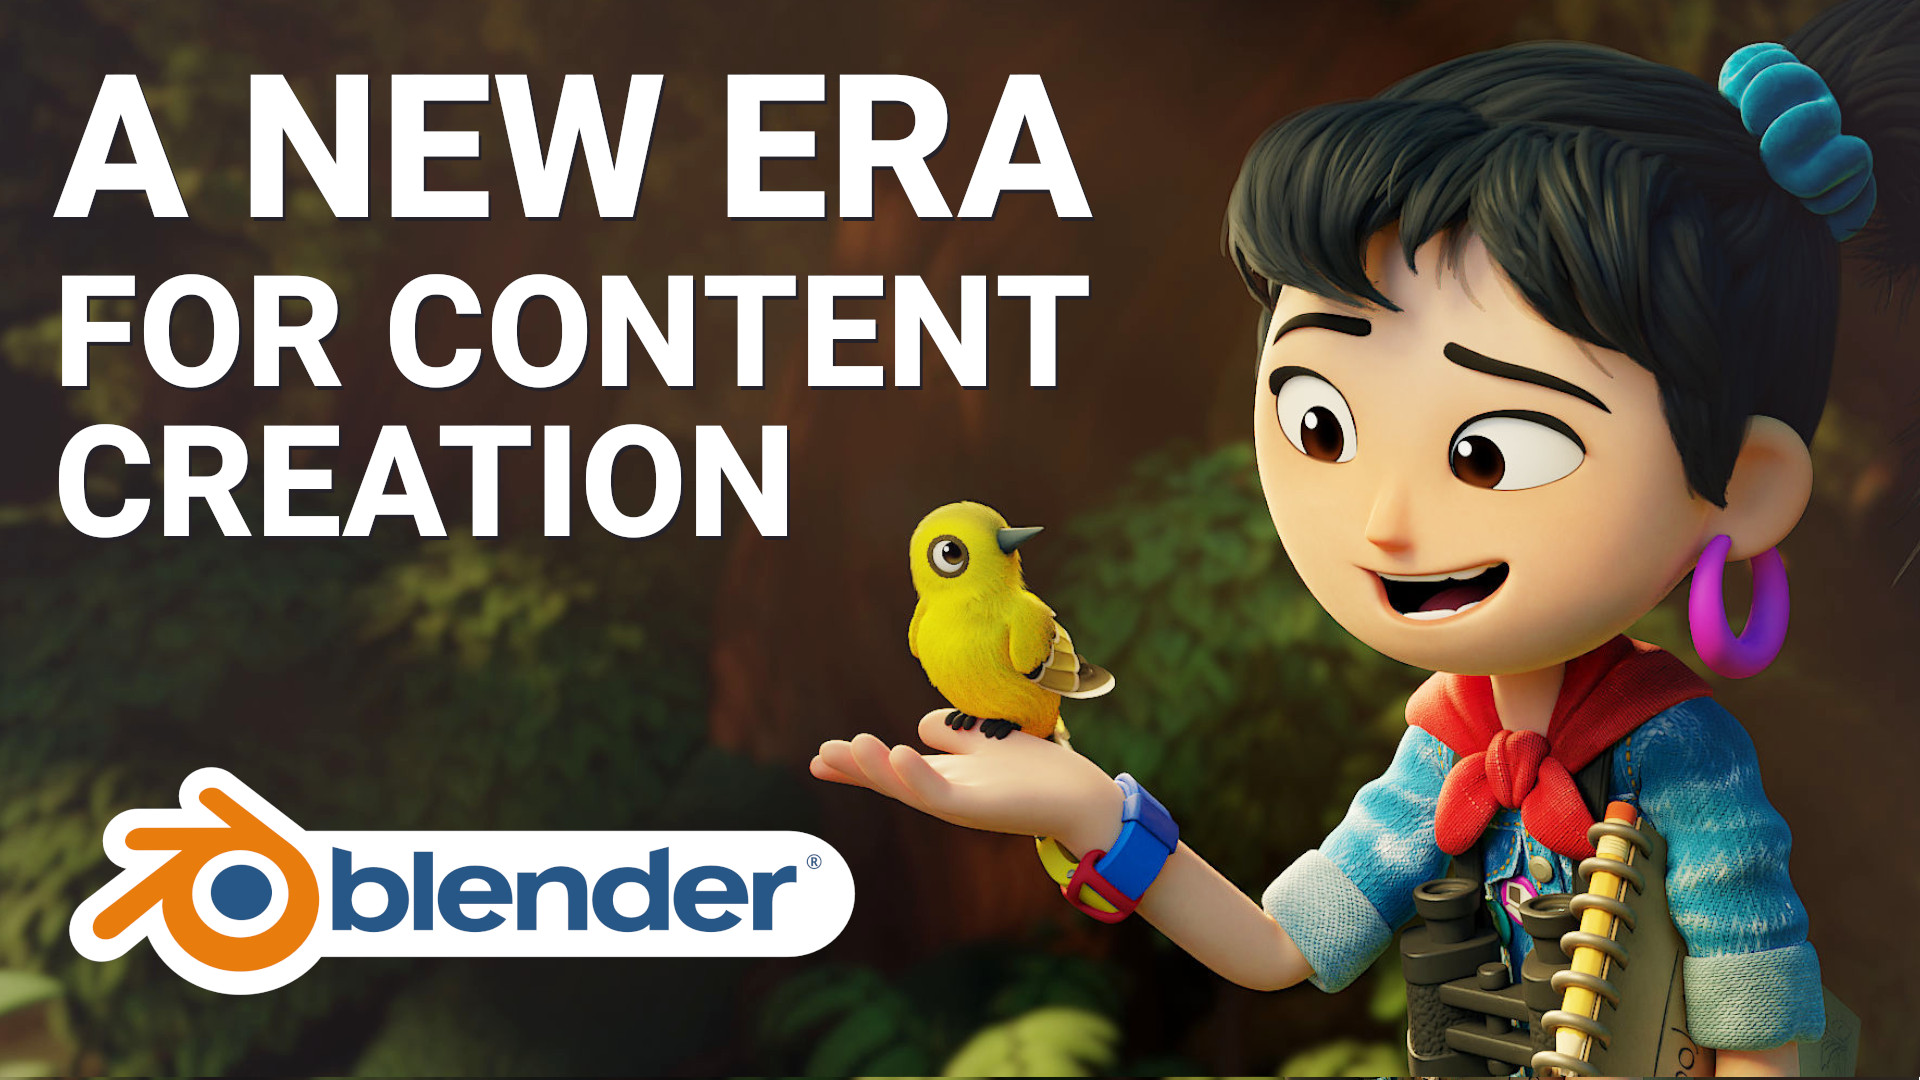 Blender 3.0, a new era for content — blender.org